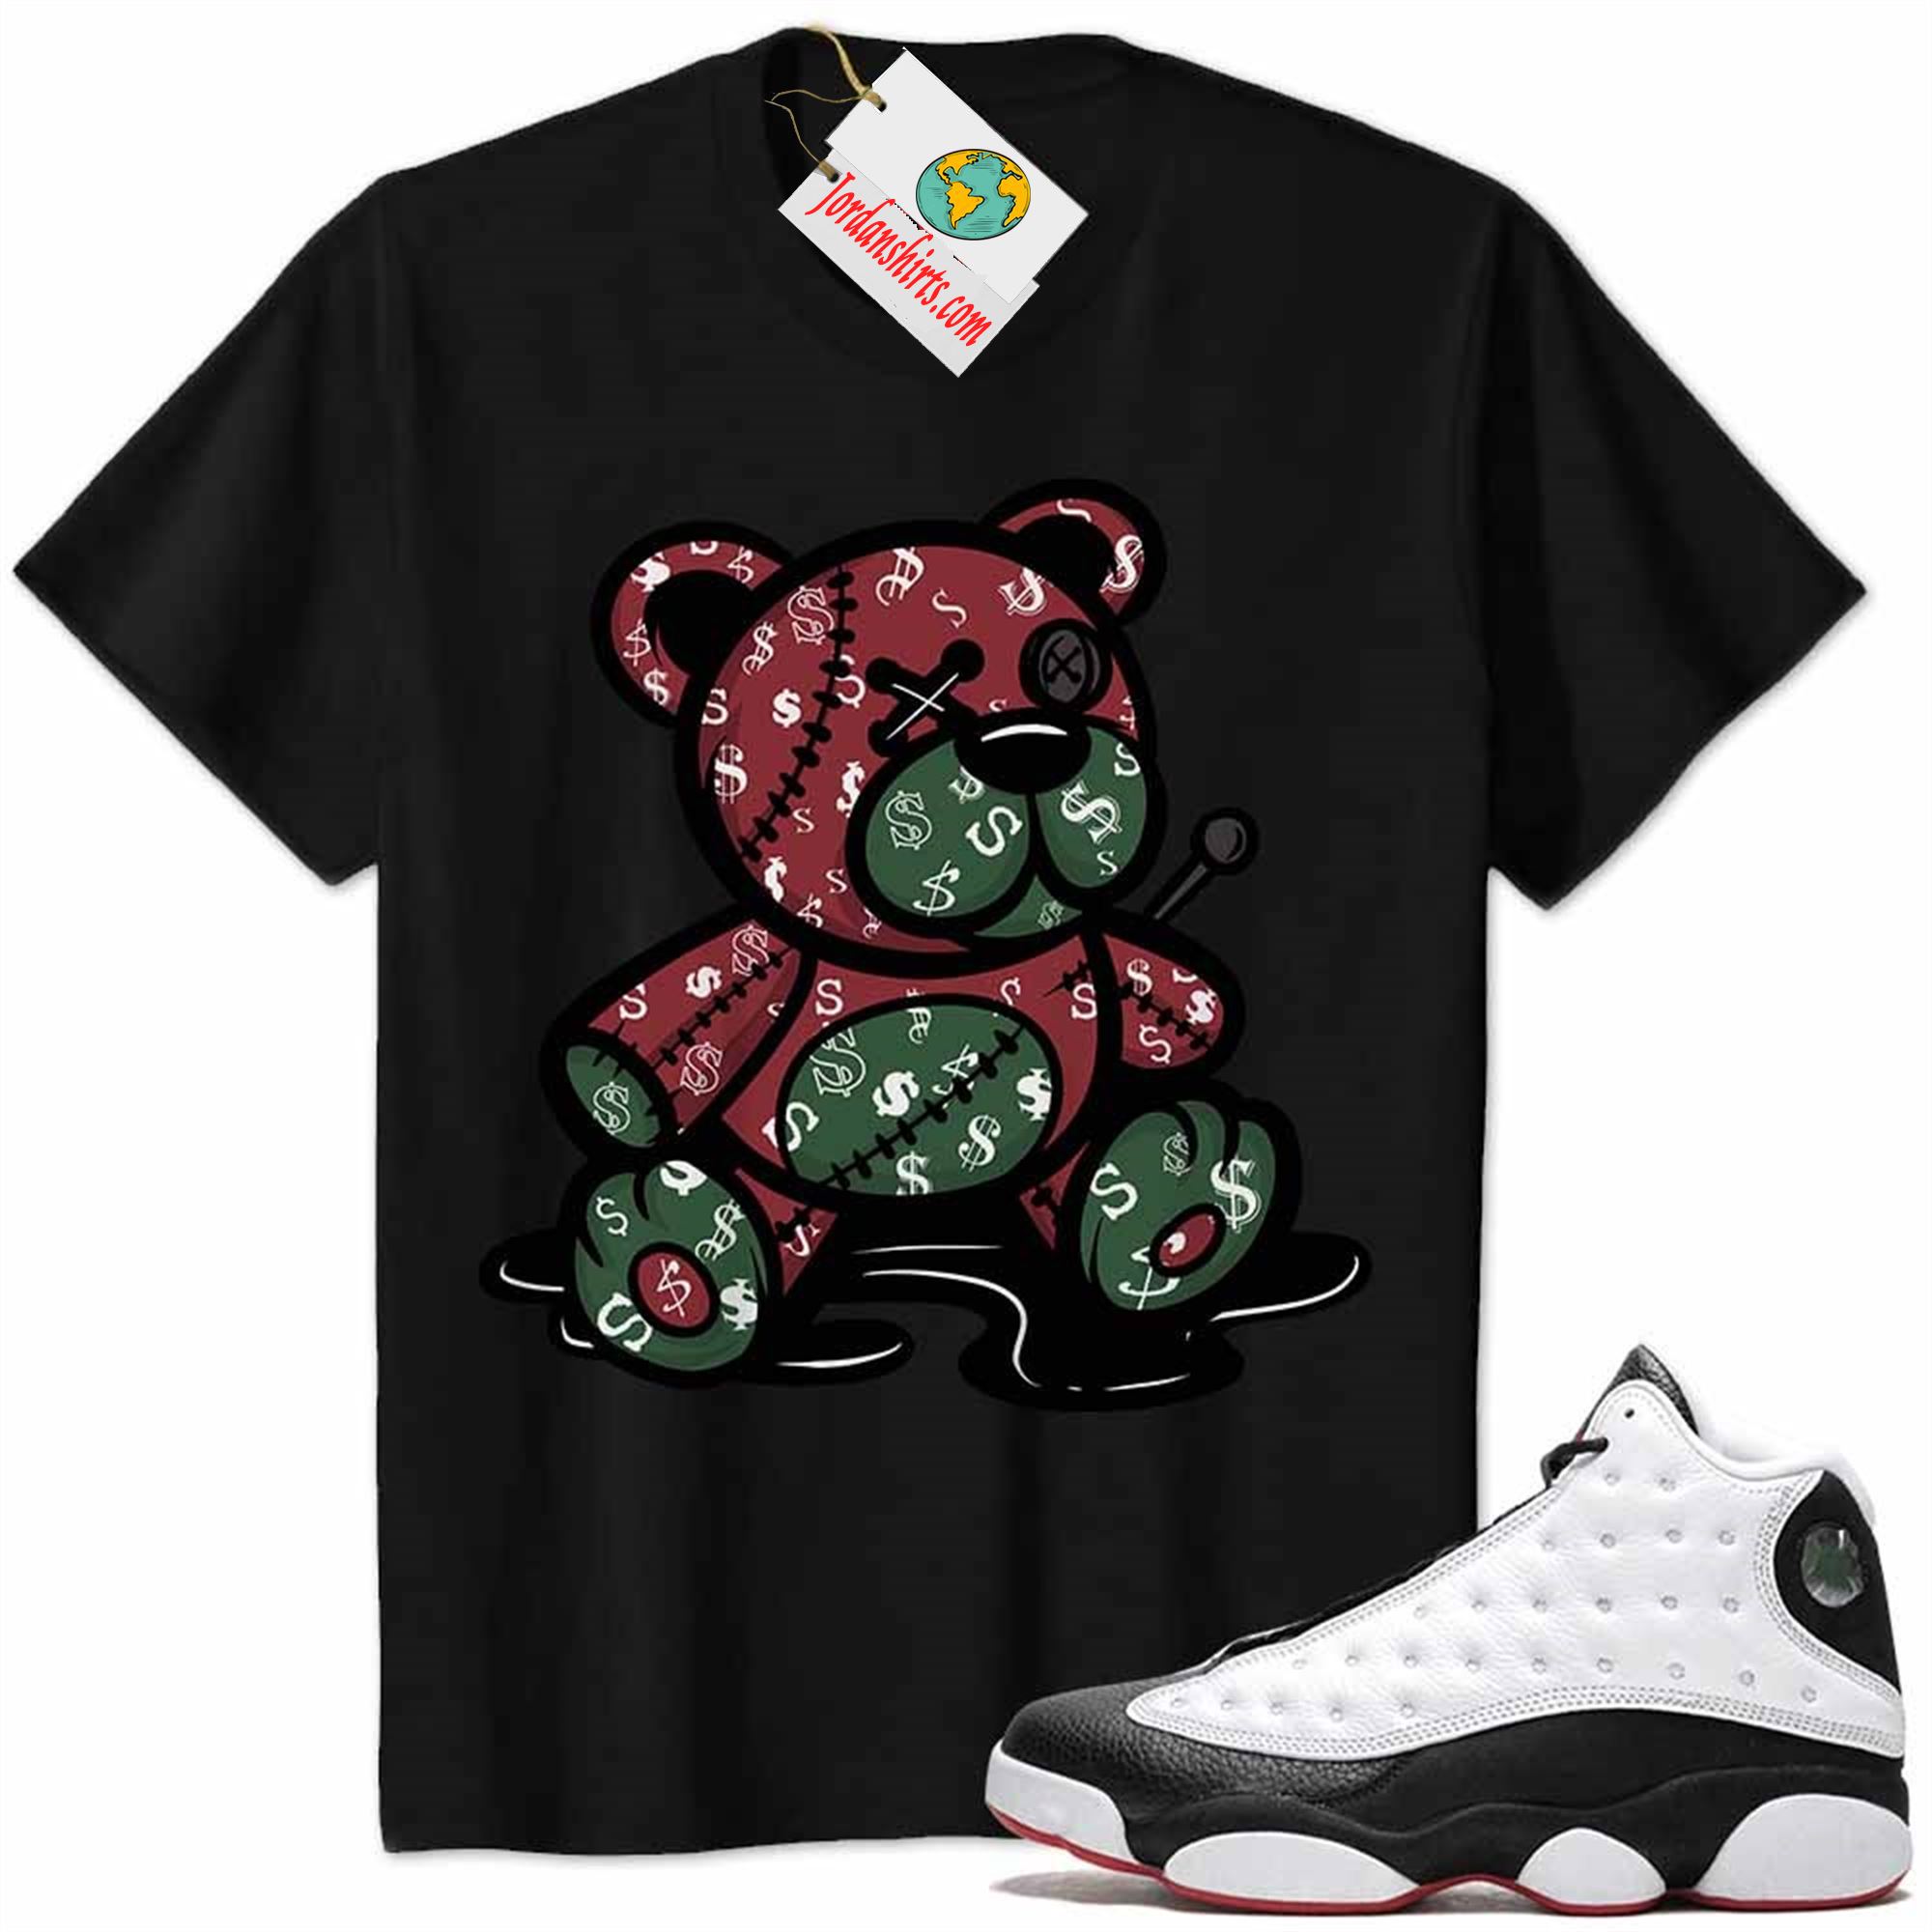 Jordan 13 Shirt, Jordan 13 He Got Game Shirt Teddy Bear All Money In Black Plus Size Up To 5xl